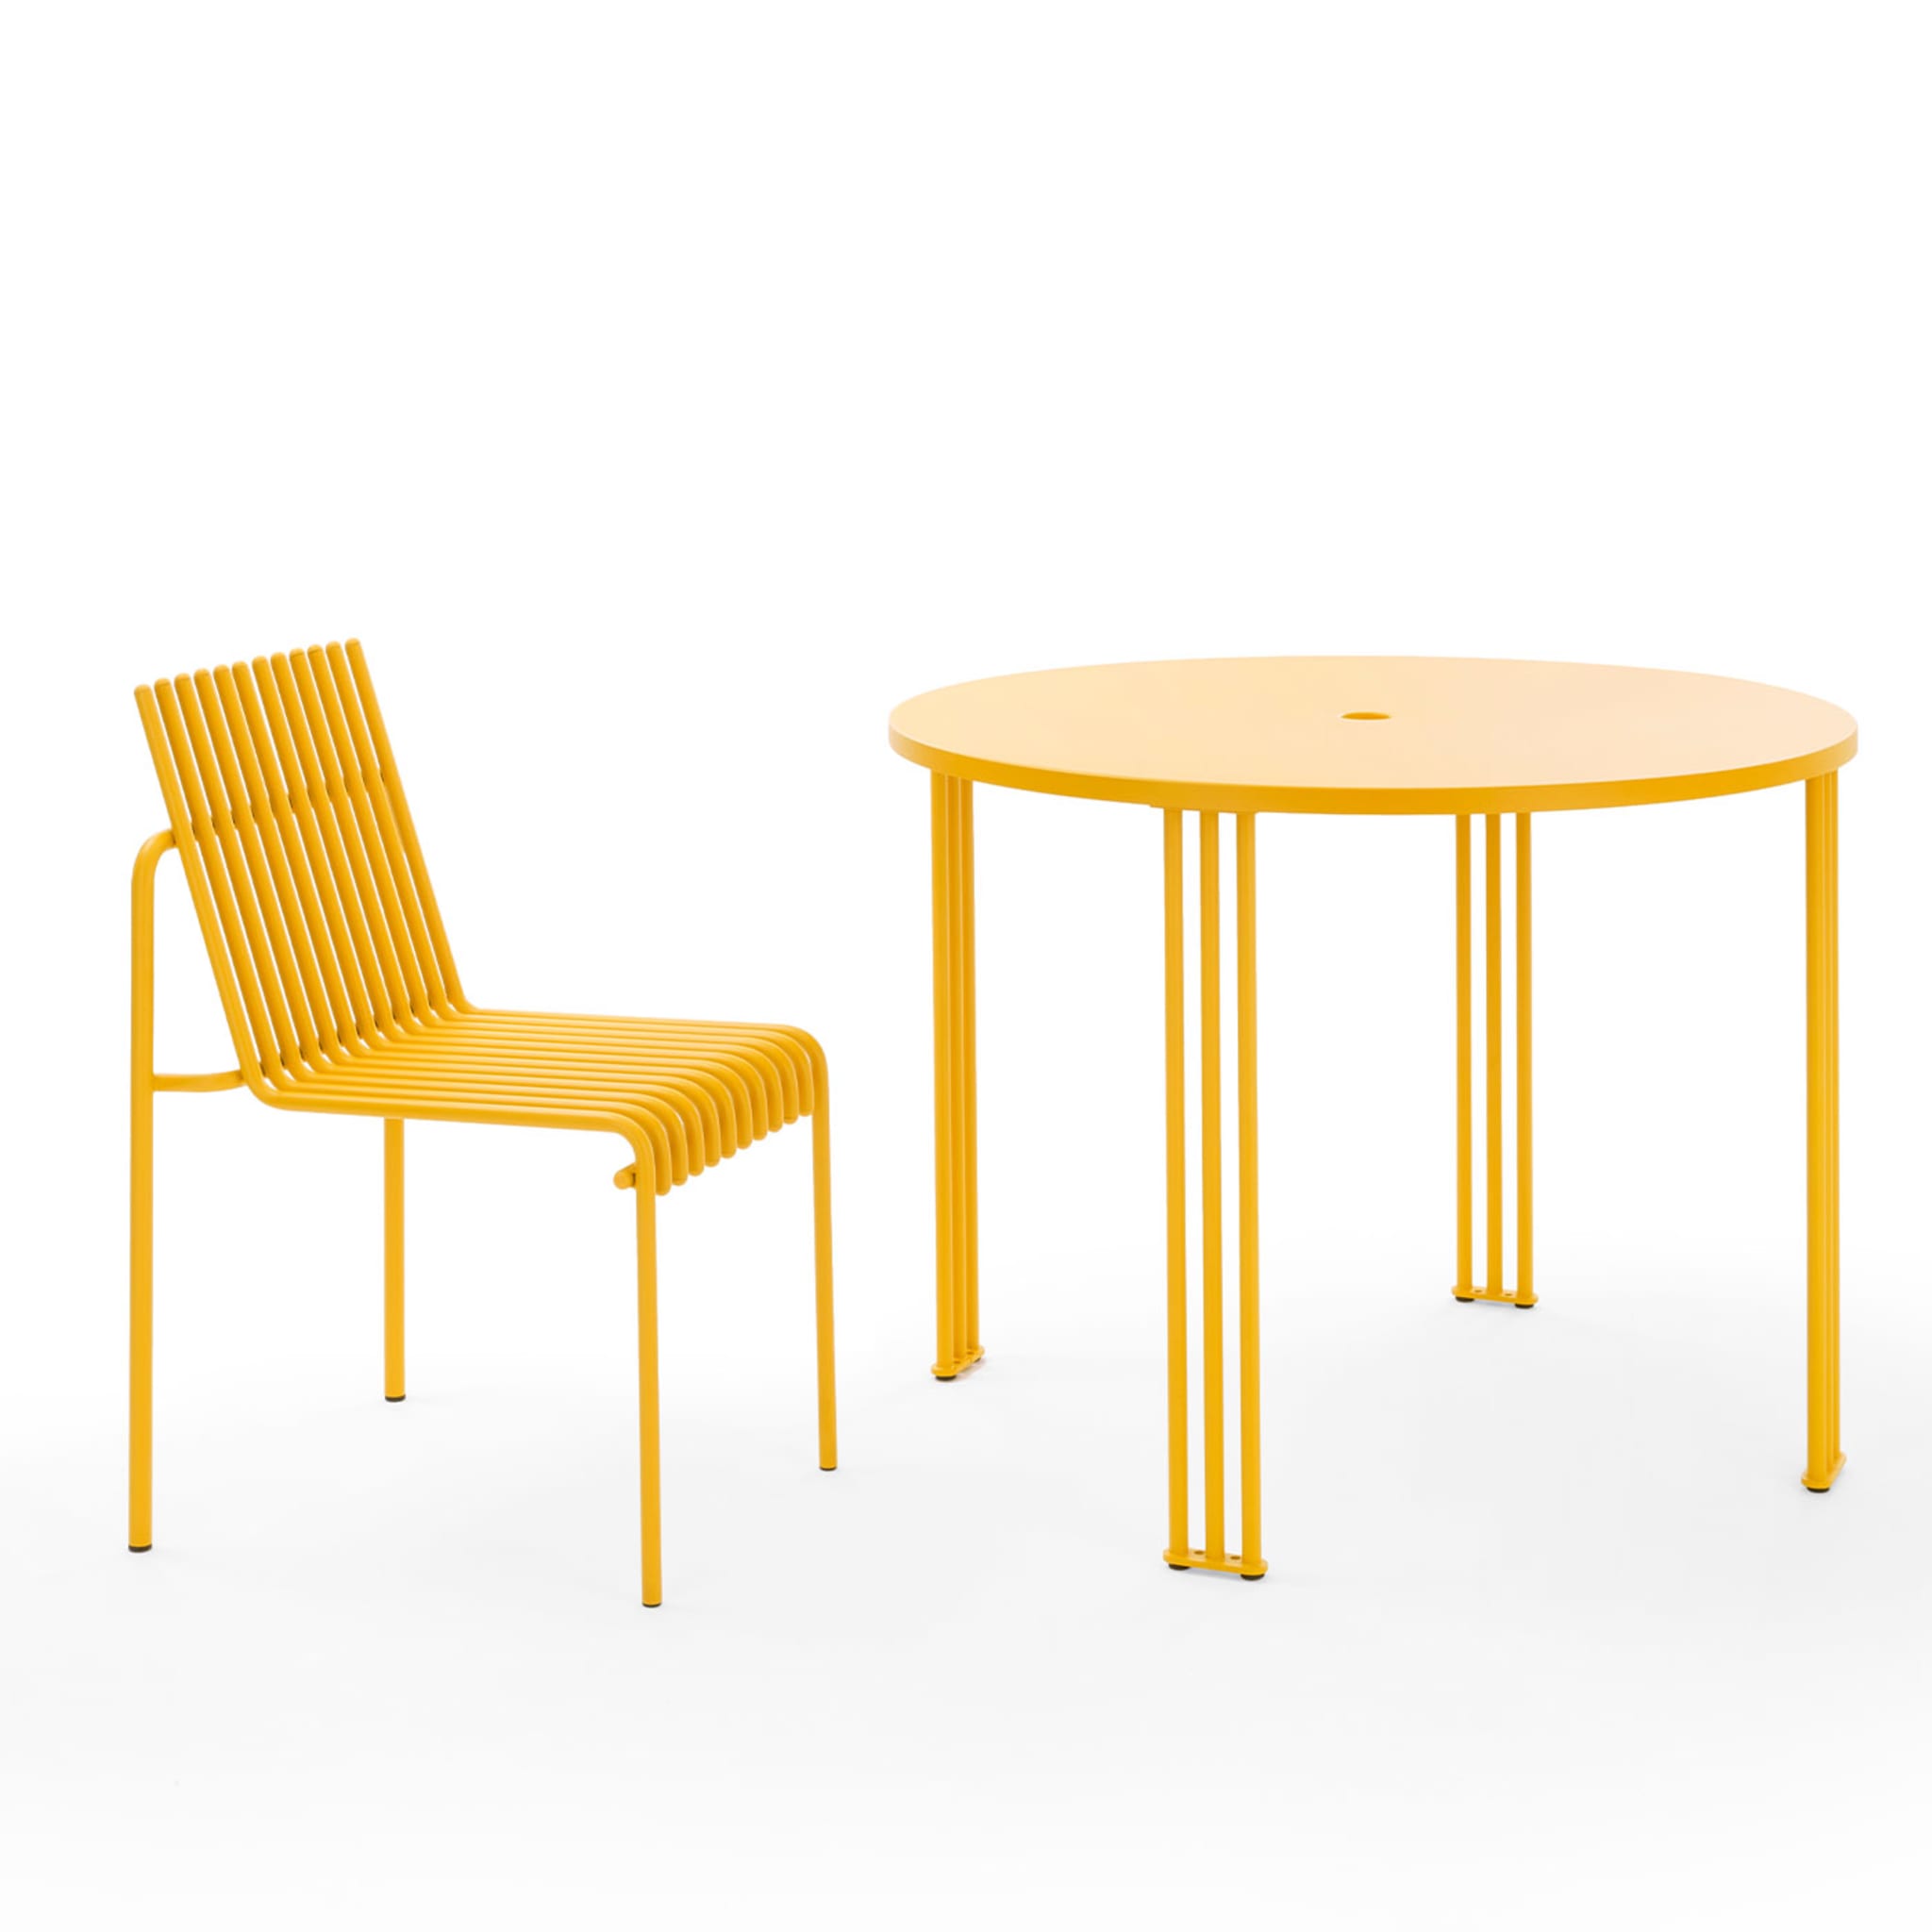 Amalfi Yellow Chair by Basaglia + Rota Nodari - Alternative view 1